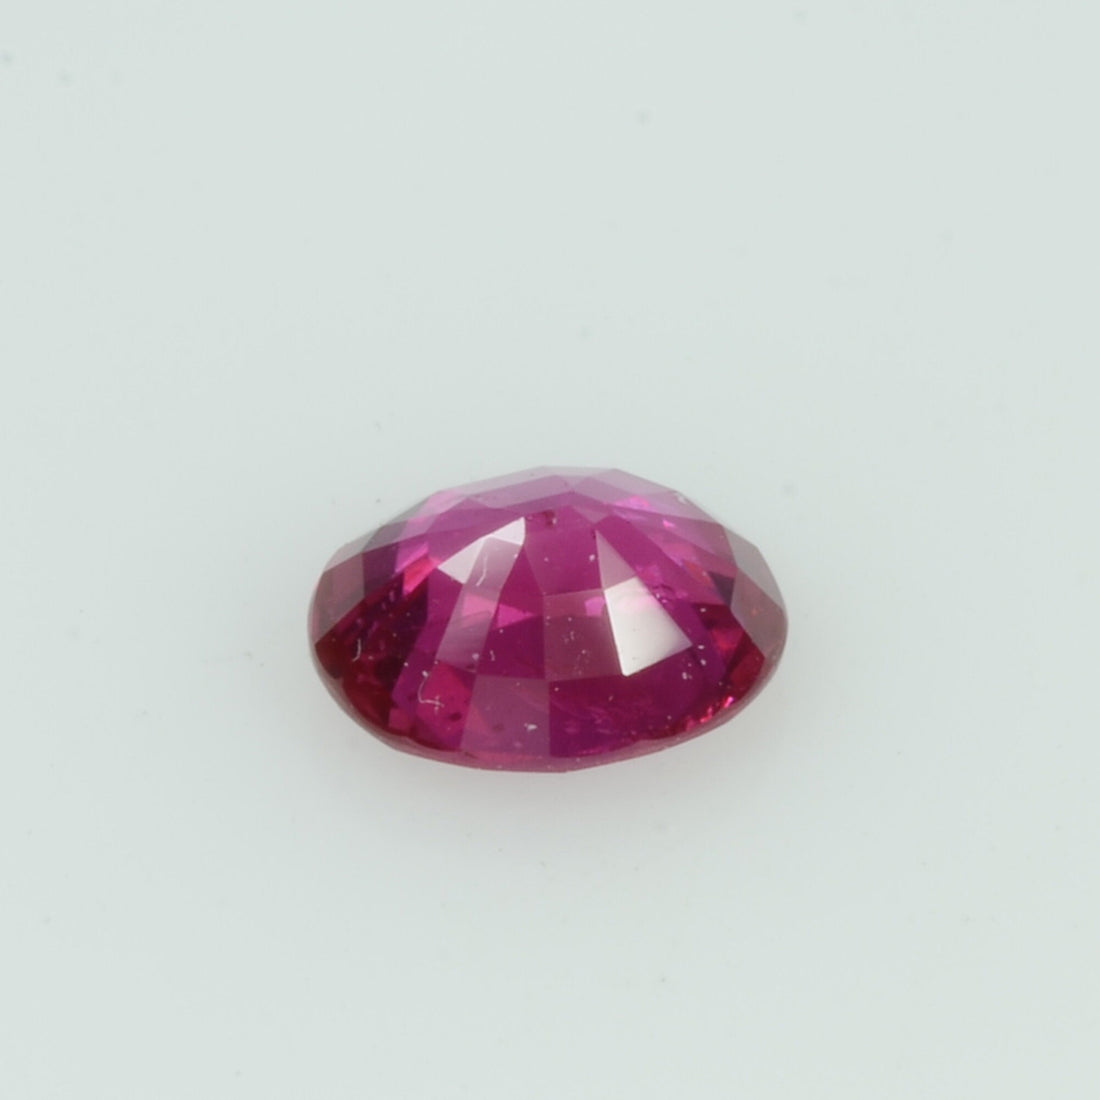 0.53 Cts Unheated Natural Burma Ruby Loose Gemstone Oval Cut